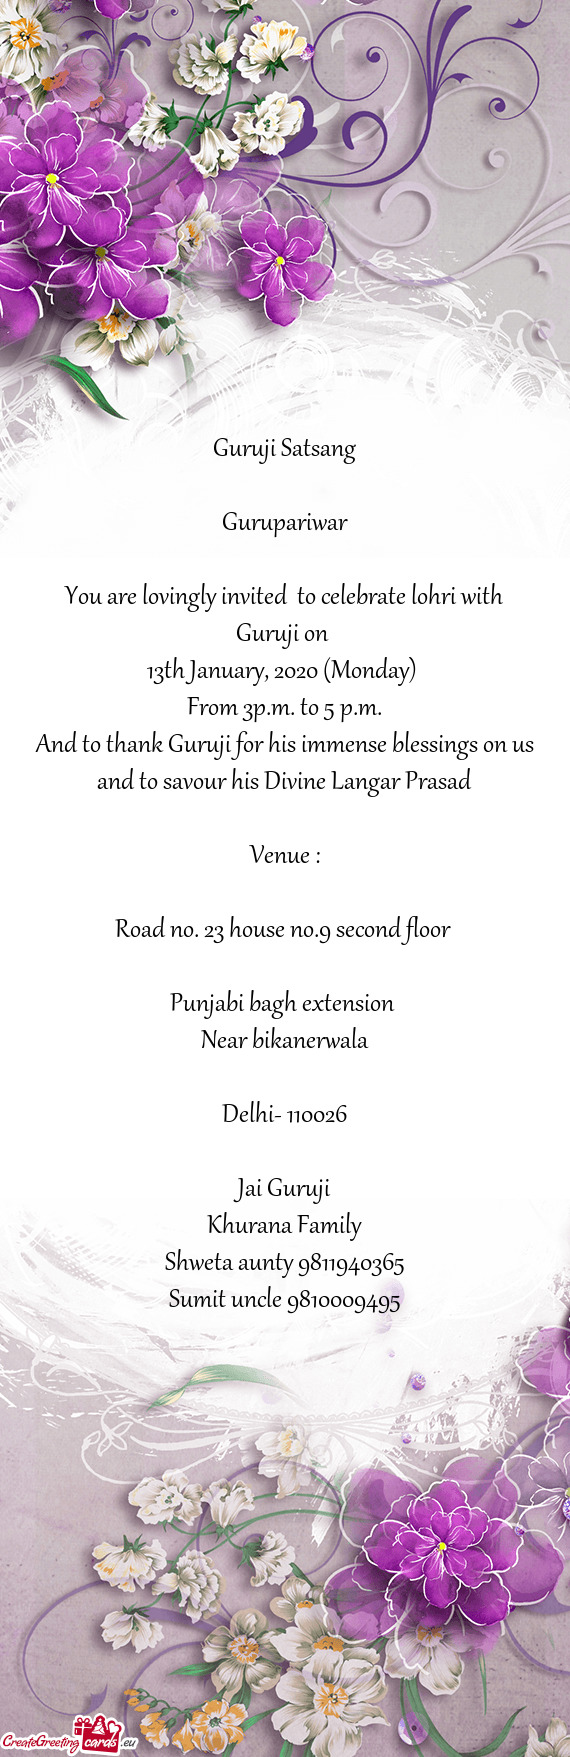 You are lovingly invited to celebrate lohri with Guruji on